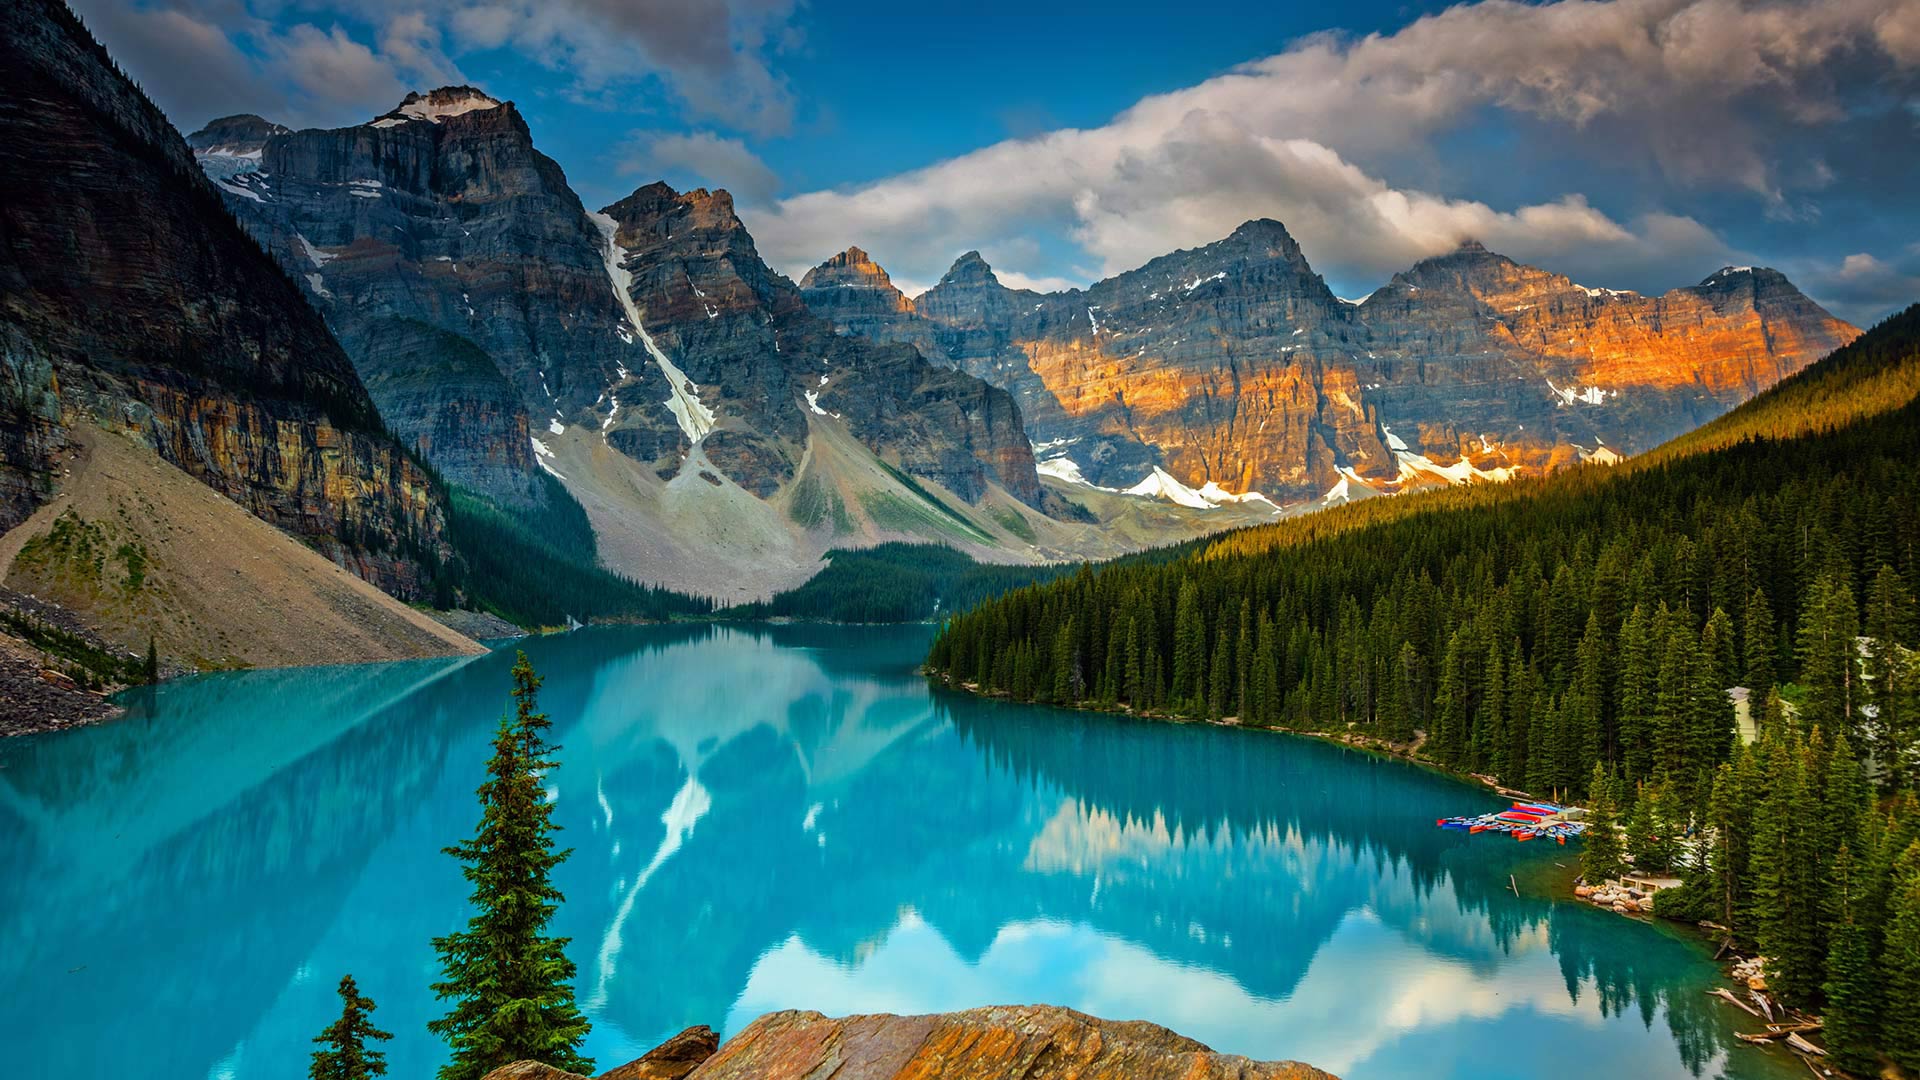 Moraine Lake in Banff National Park, Alberta, Canada - Schroptschop/Getty Images)